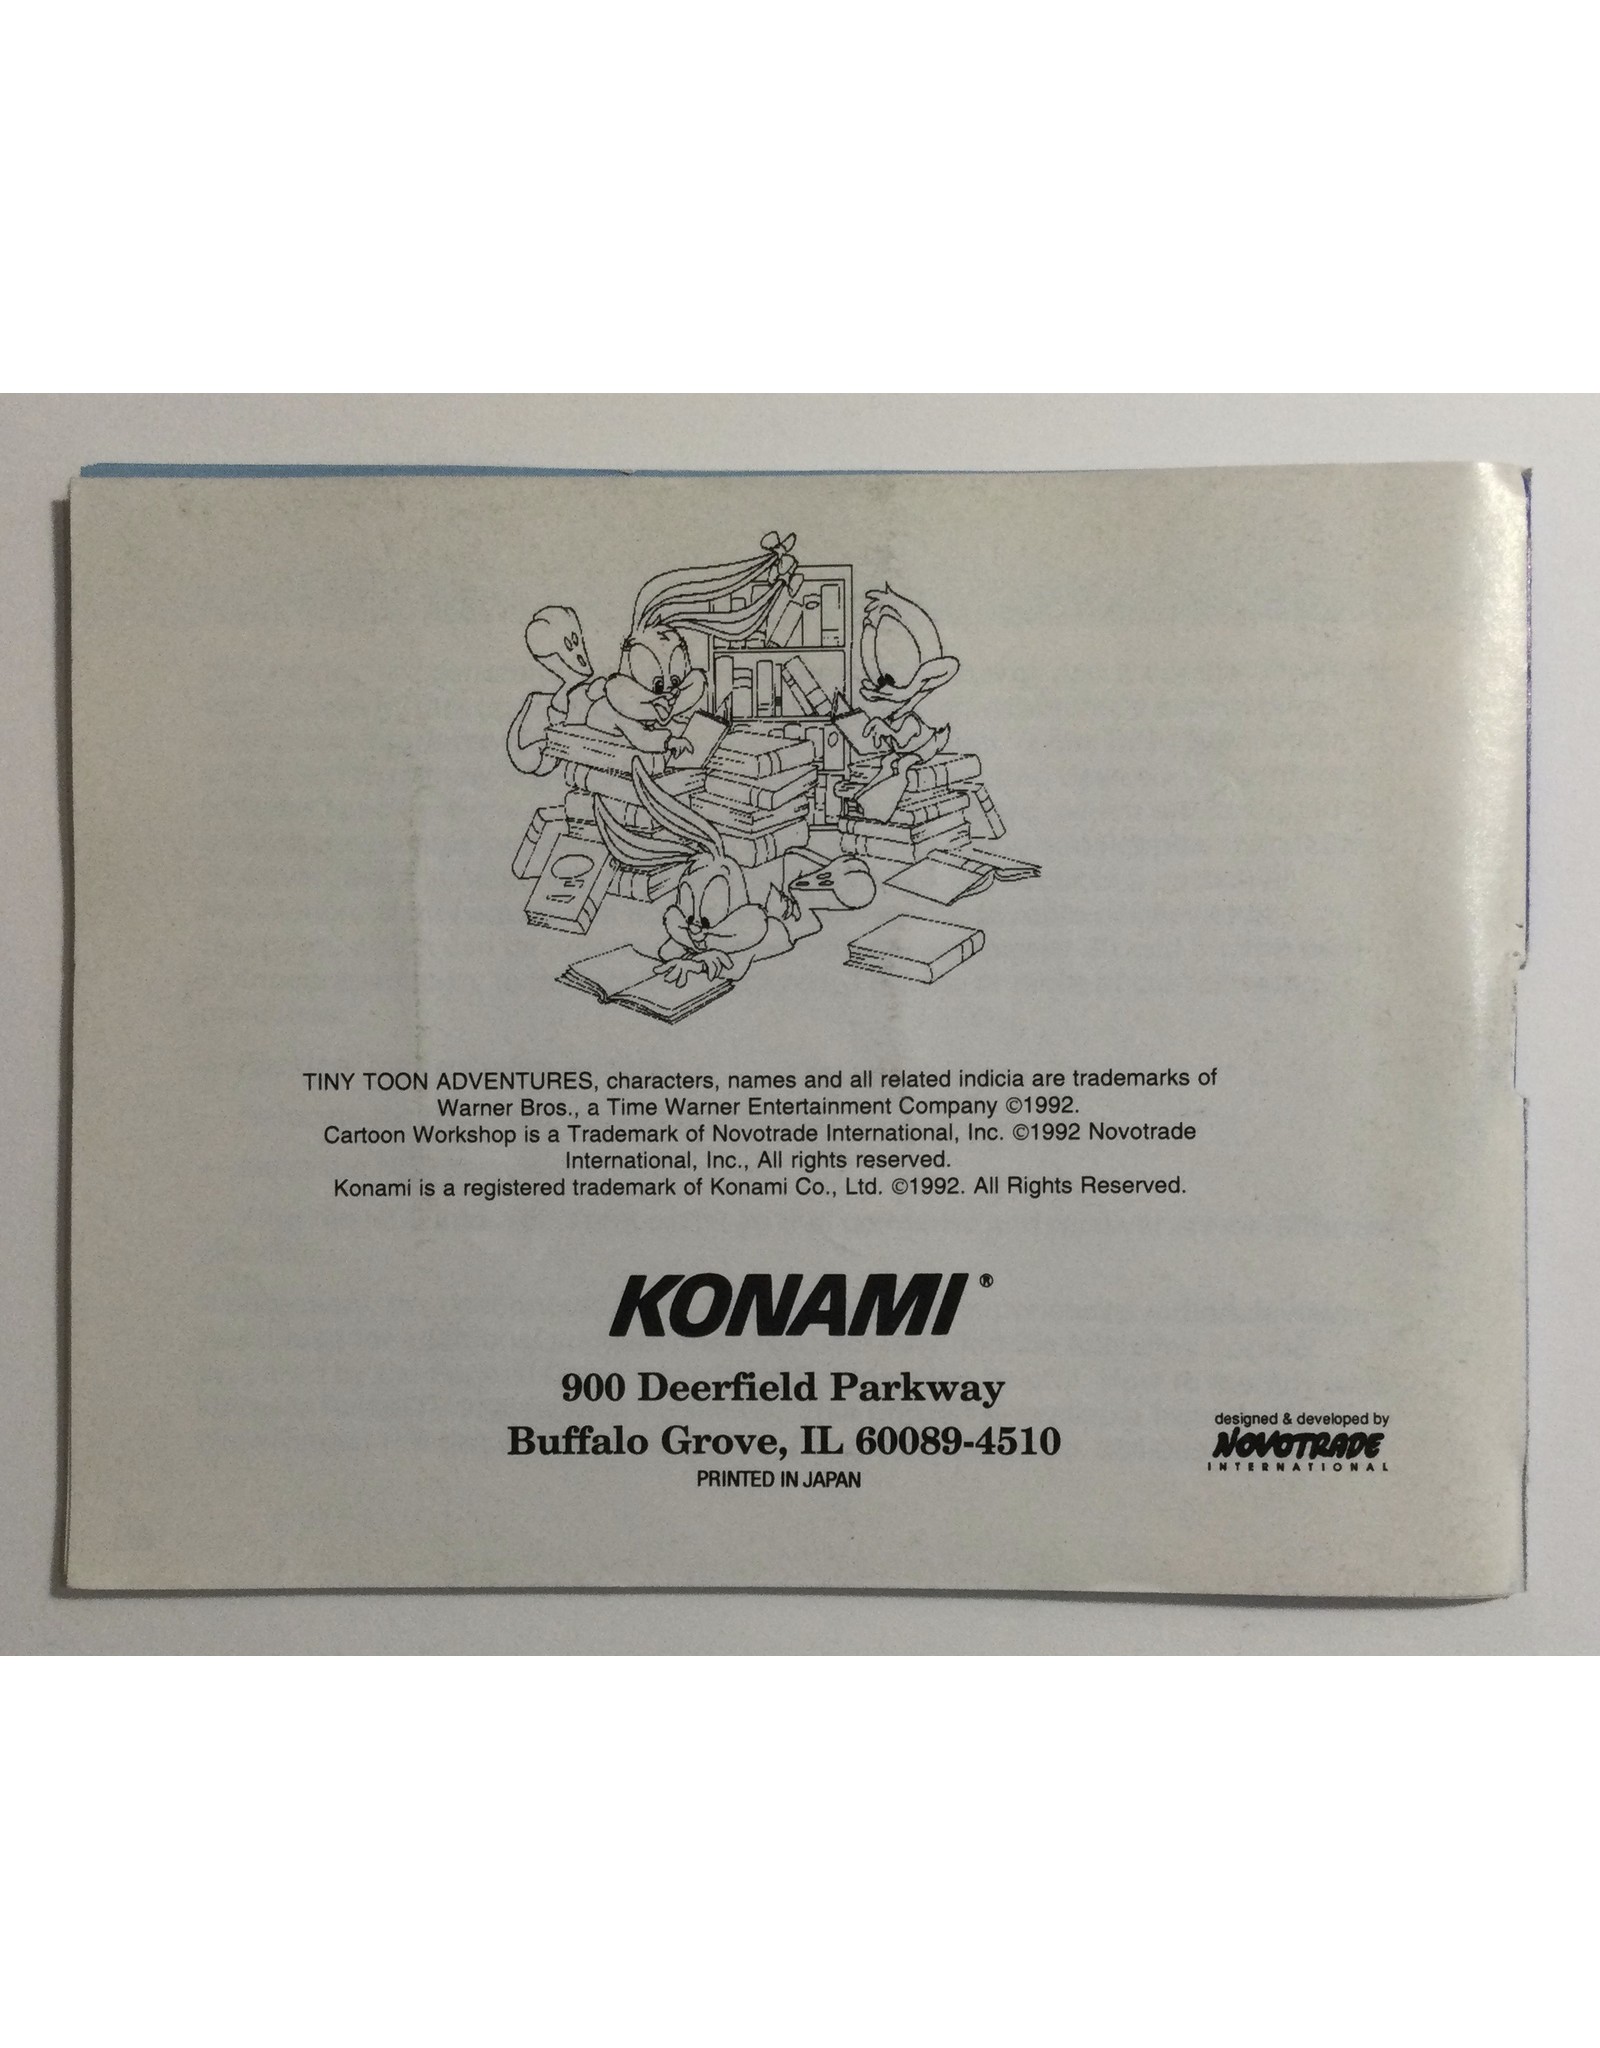 KONAMI Cartoon Workshop for Nintendo Entertainment system (NES)